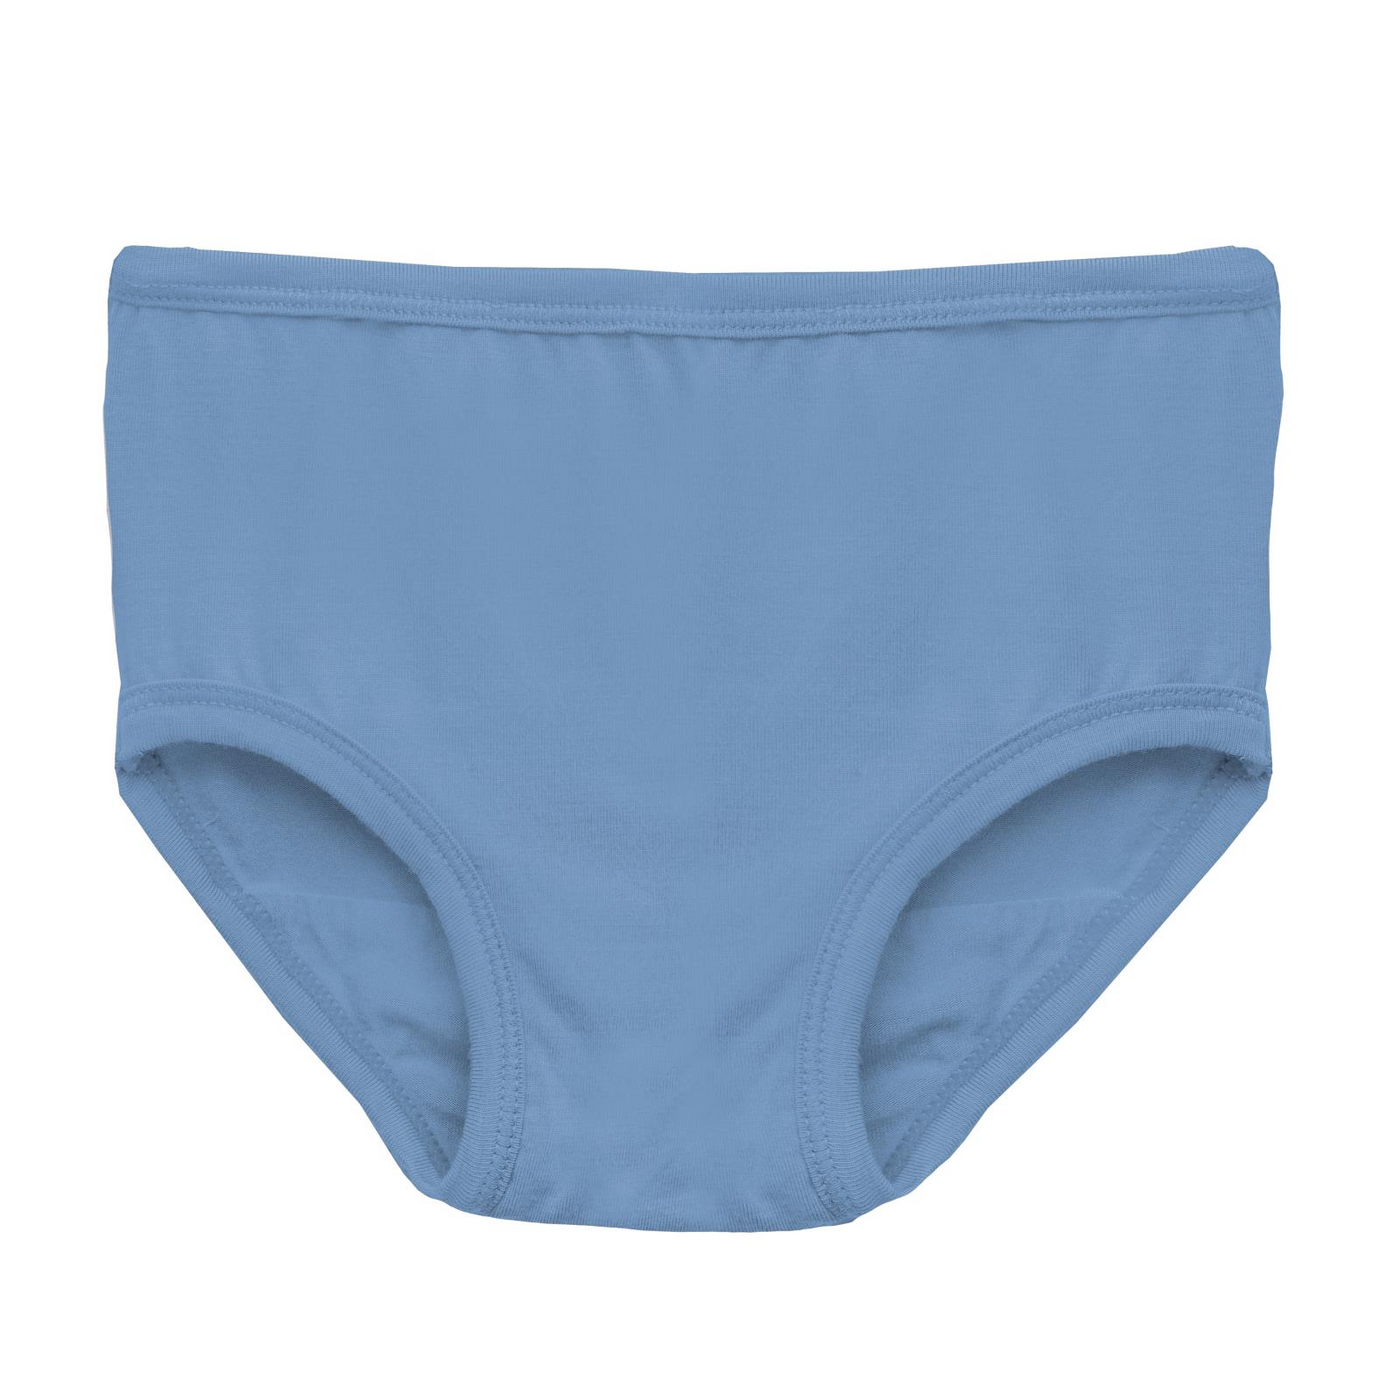 Kickee Pants Girl's Underwear: Solid Dream Blue